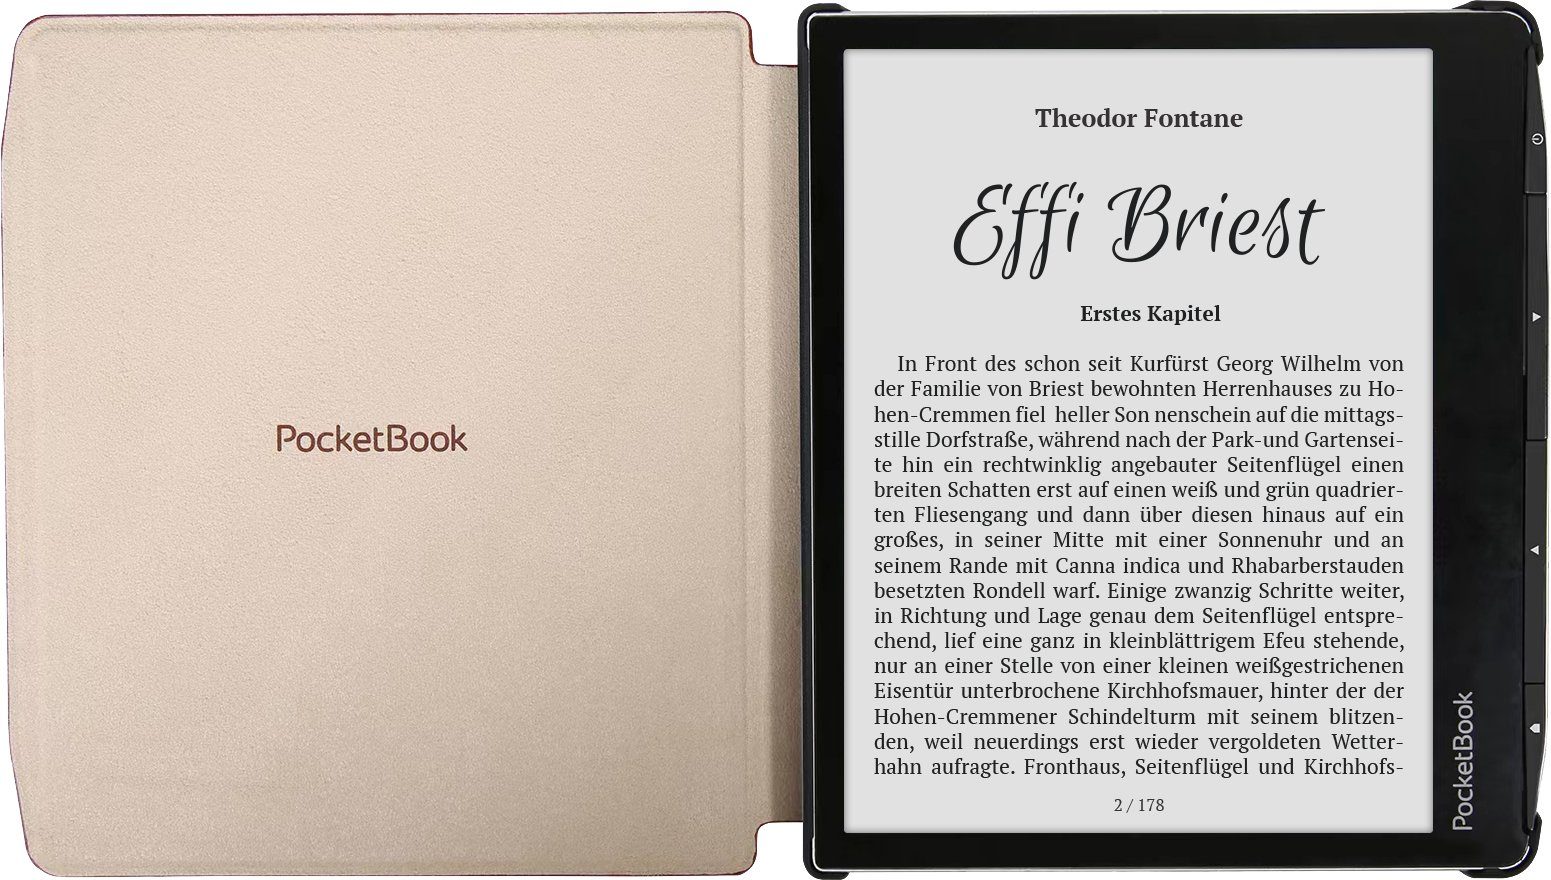 Pocketbook ERA e-reader - 2022